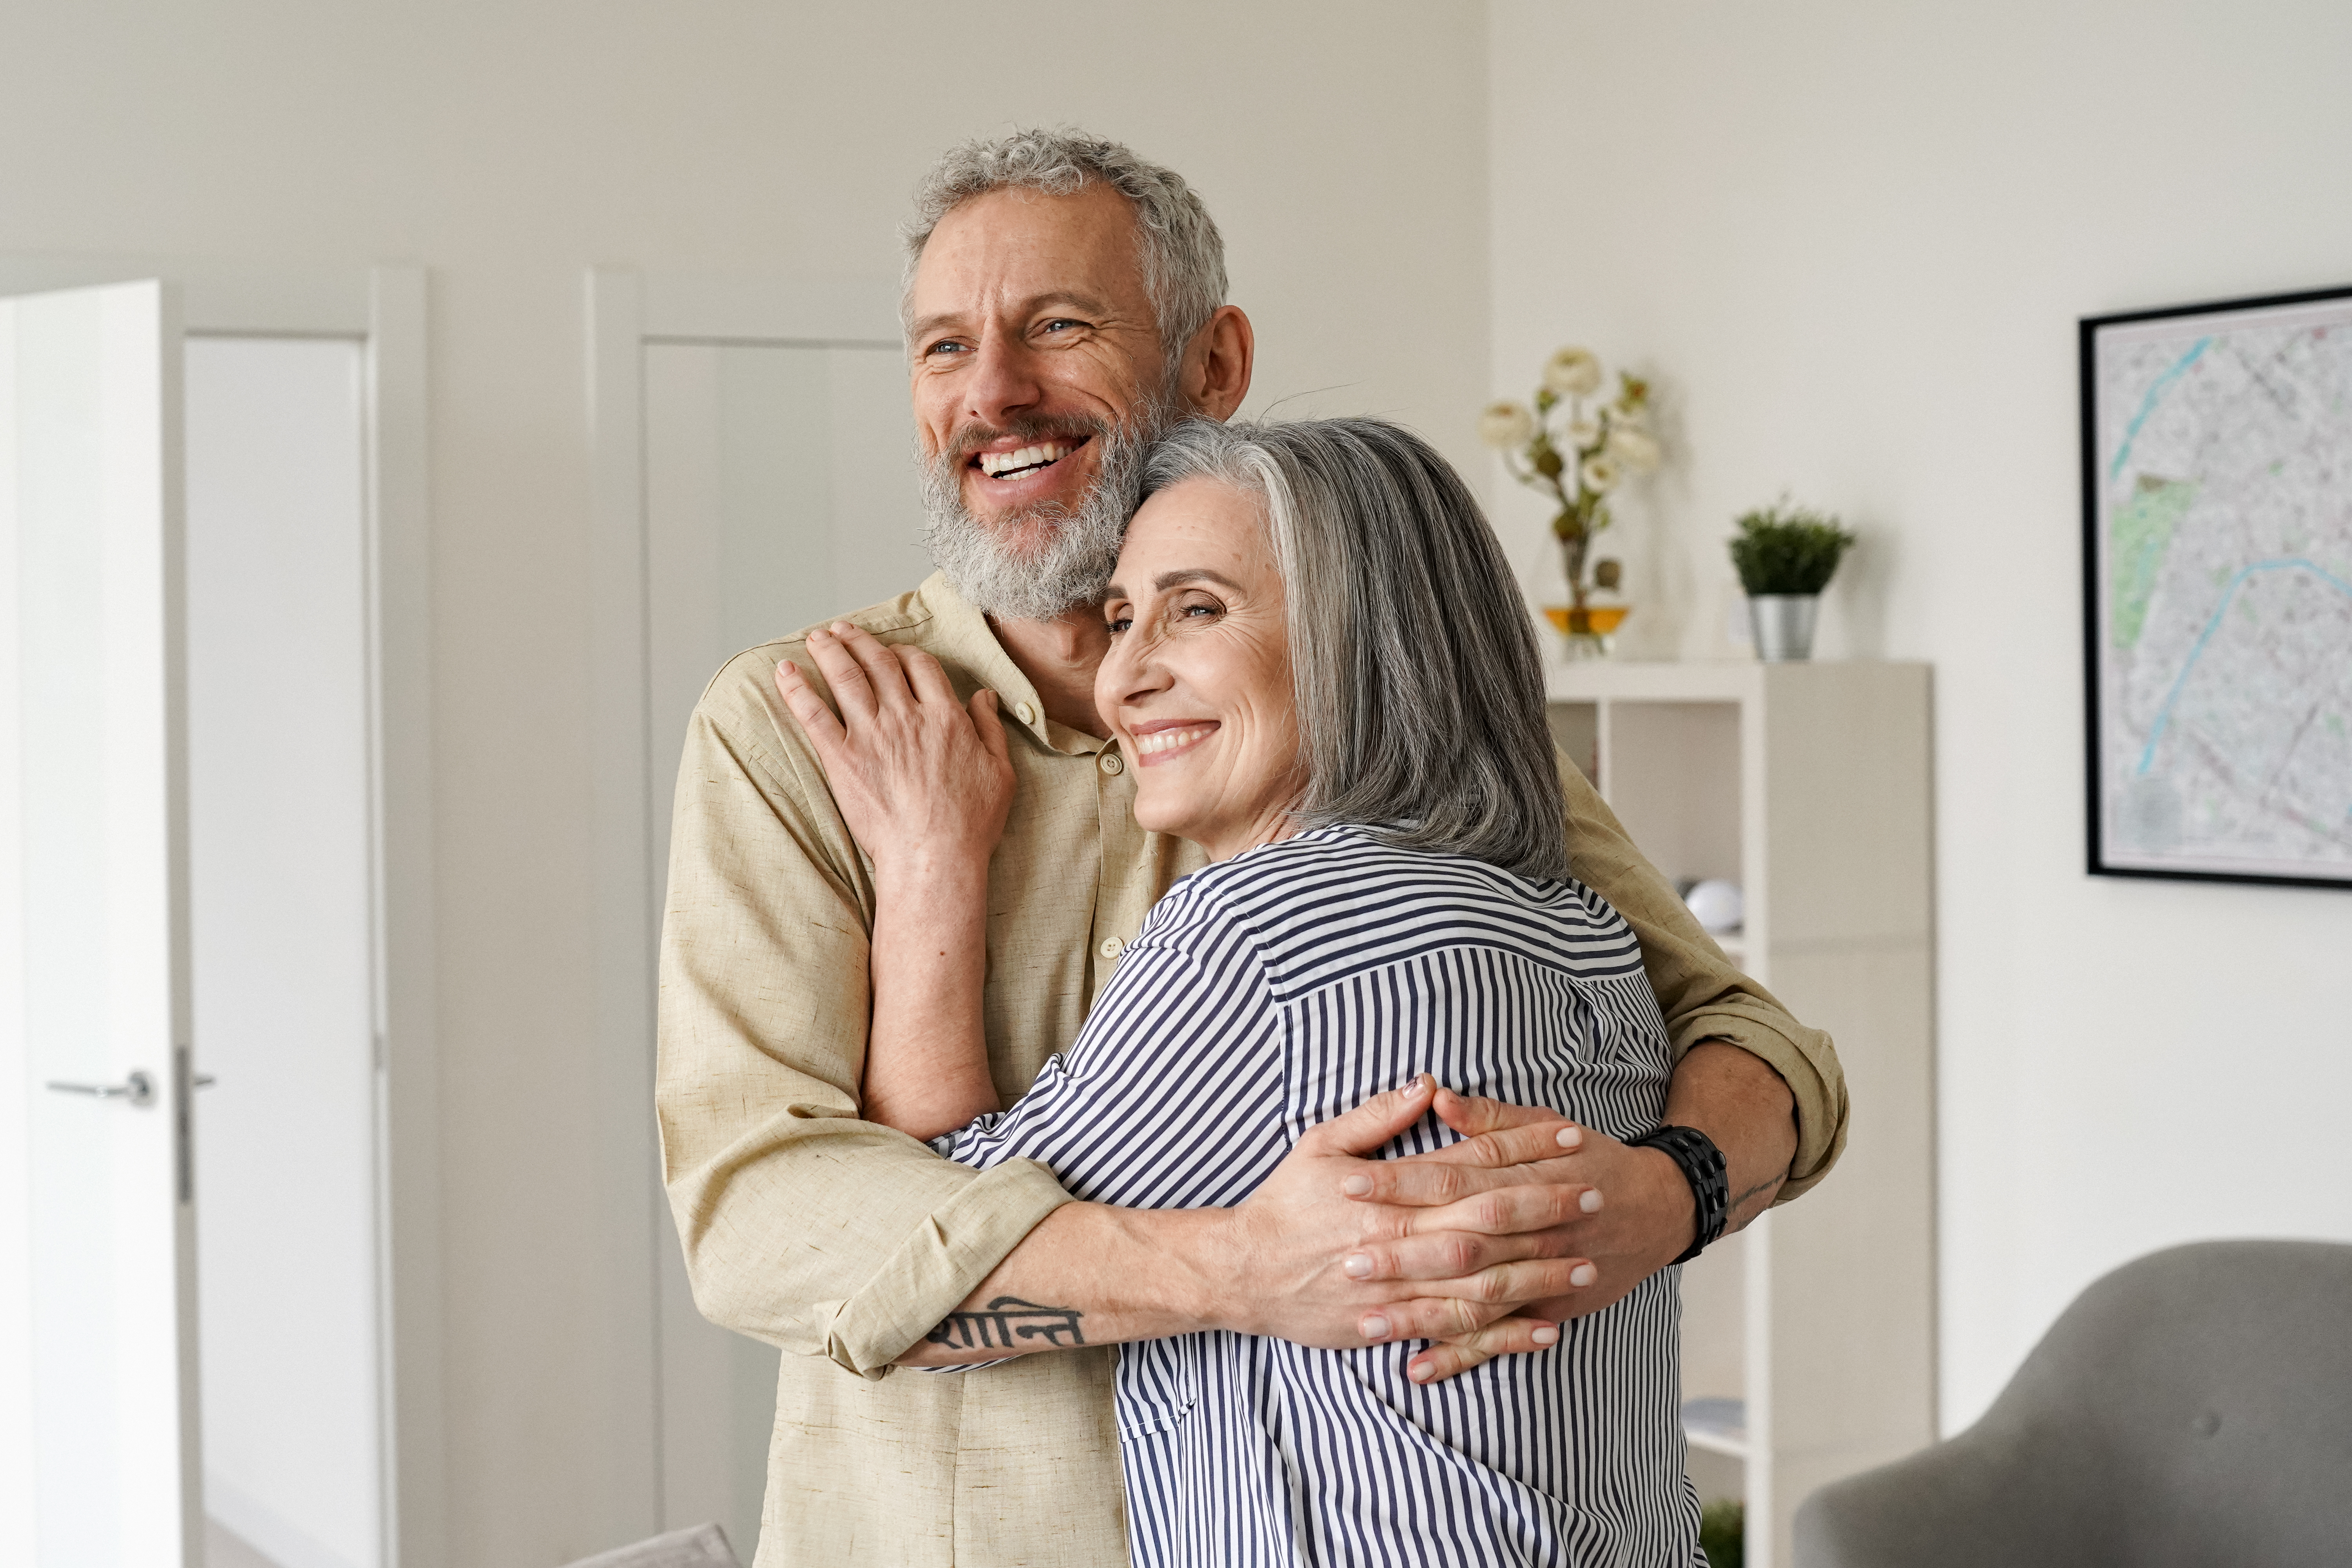 A happy senior couple hugging | Source: Shutterstock